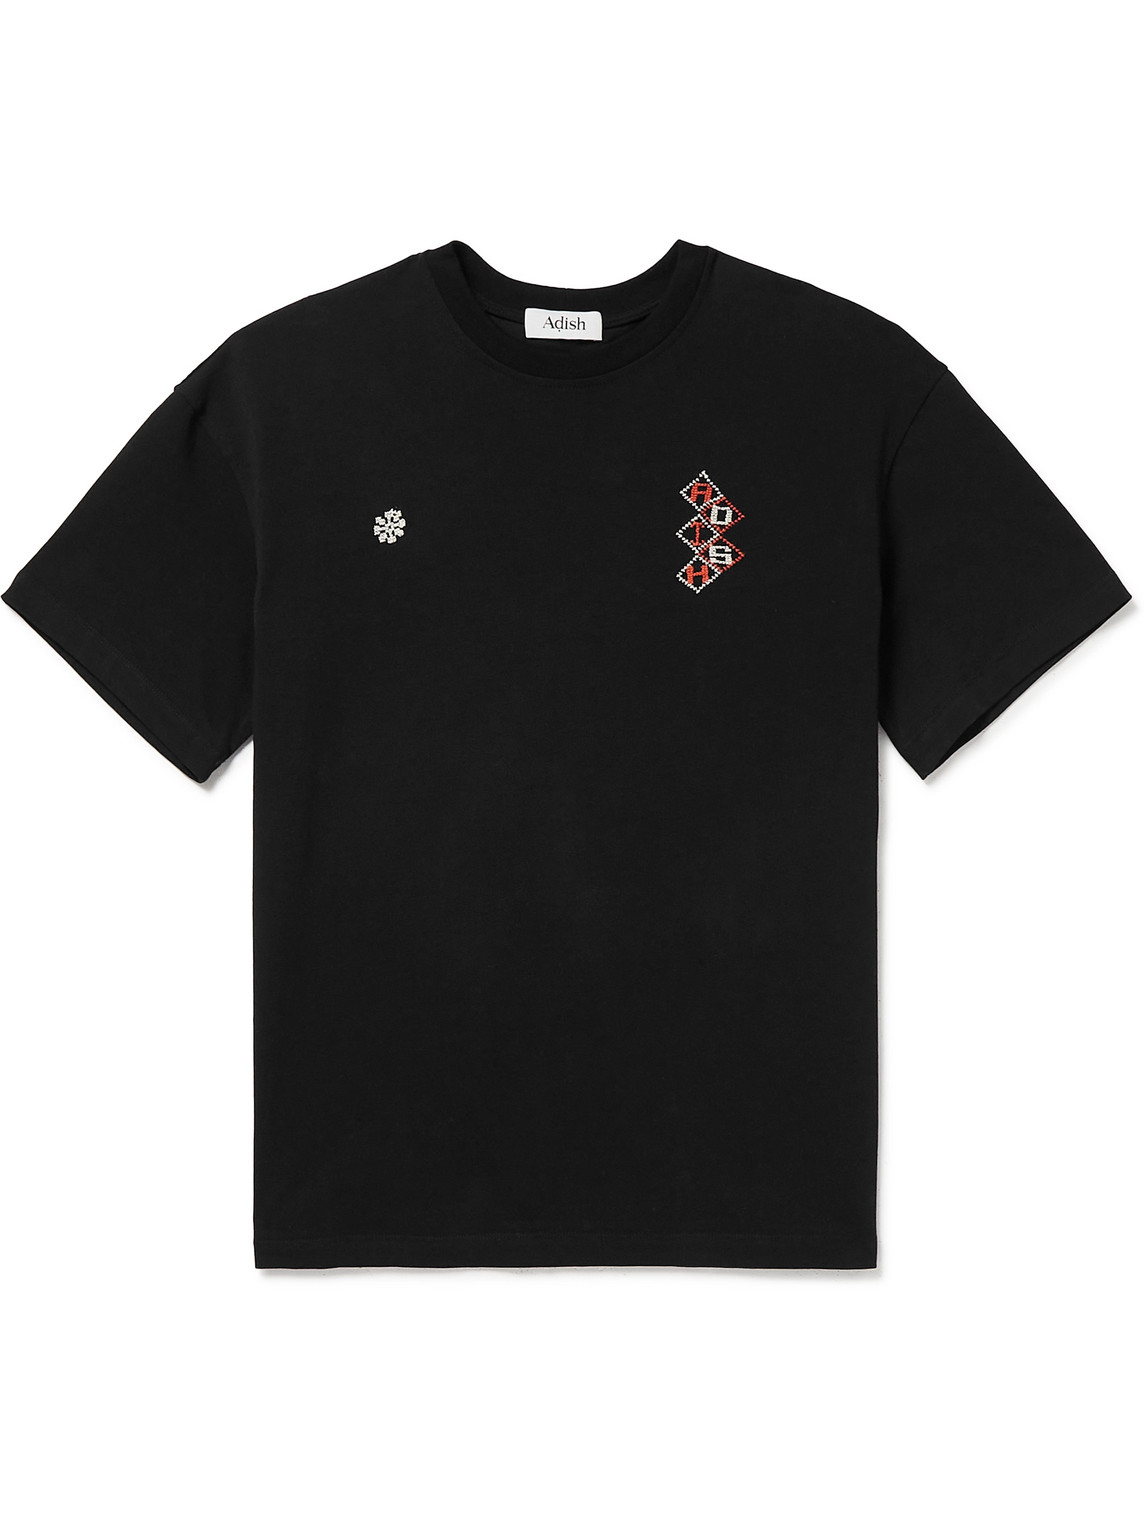 Adish Logo-Embroidered Cotton-Jersey T-Shirt